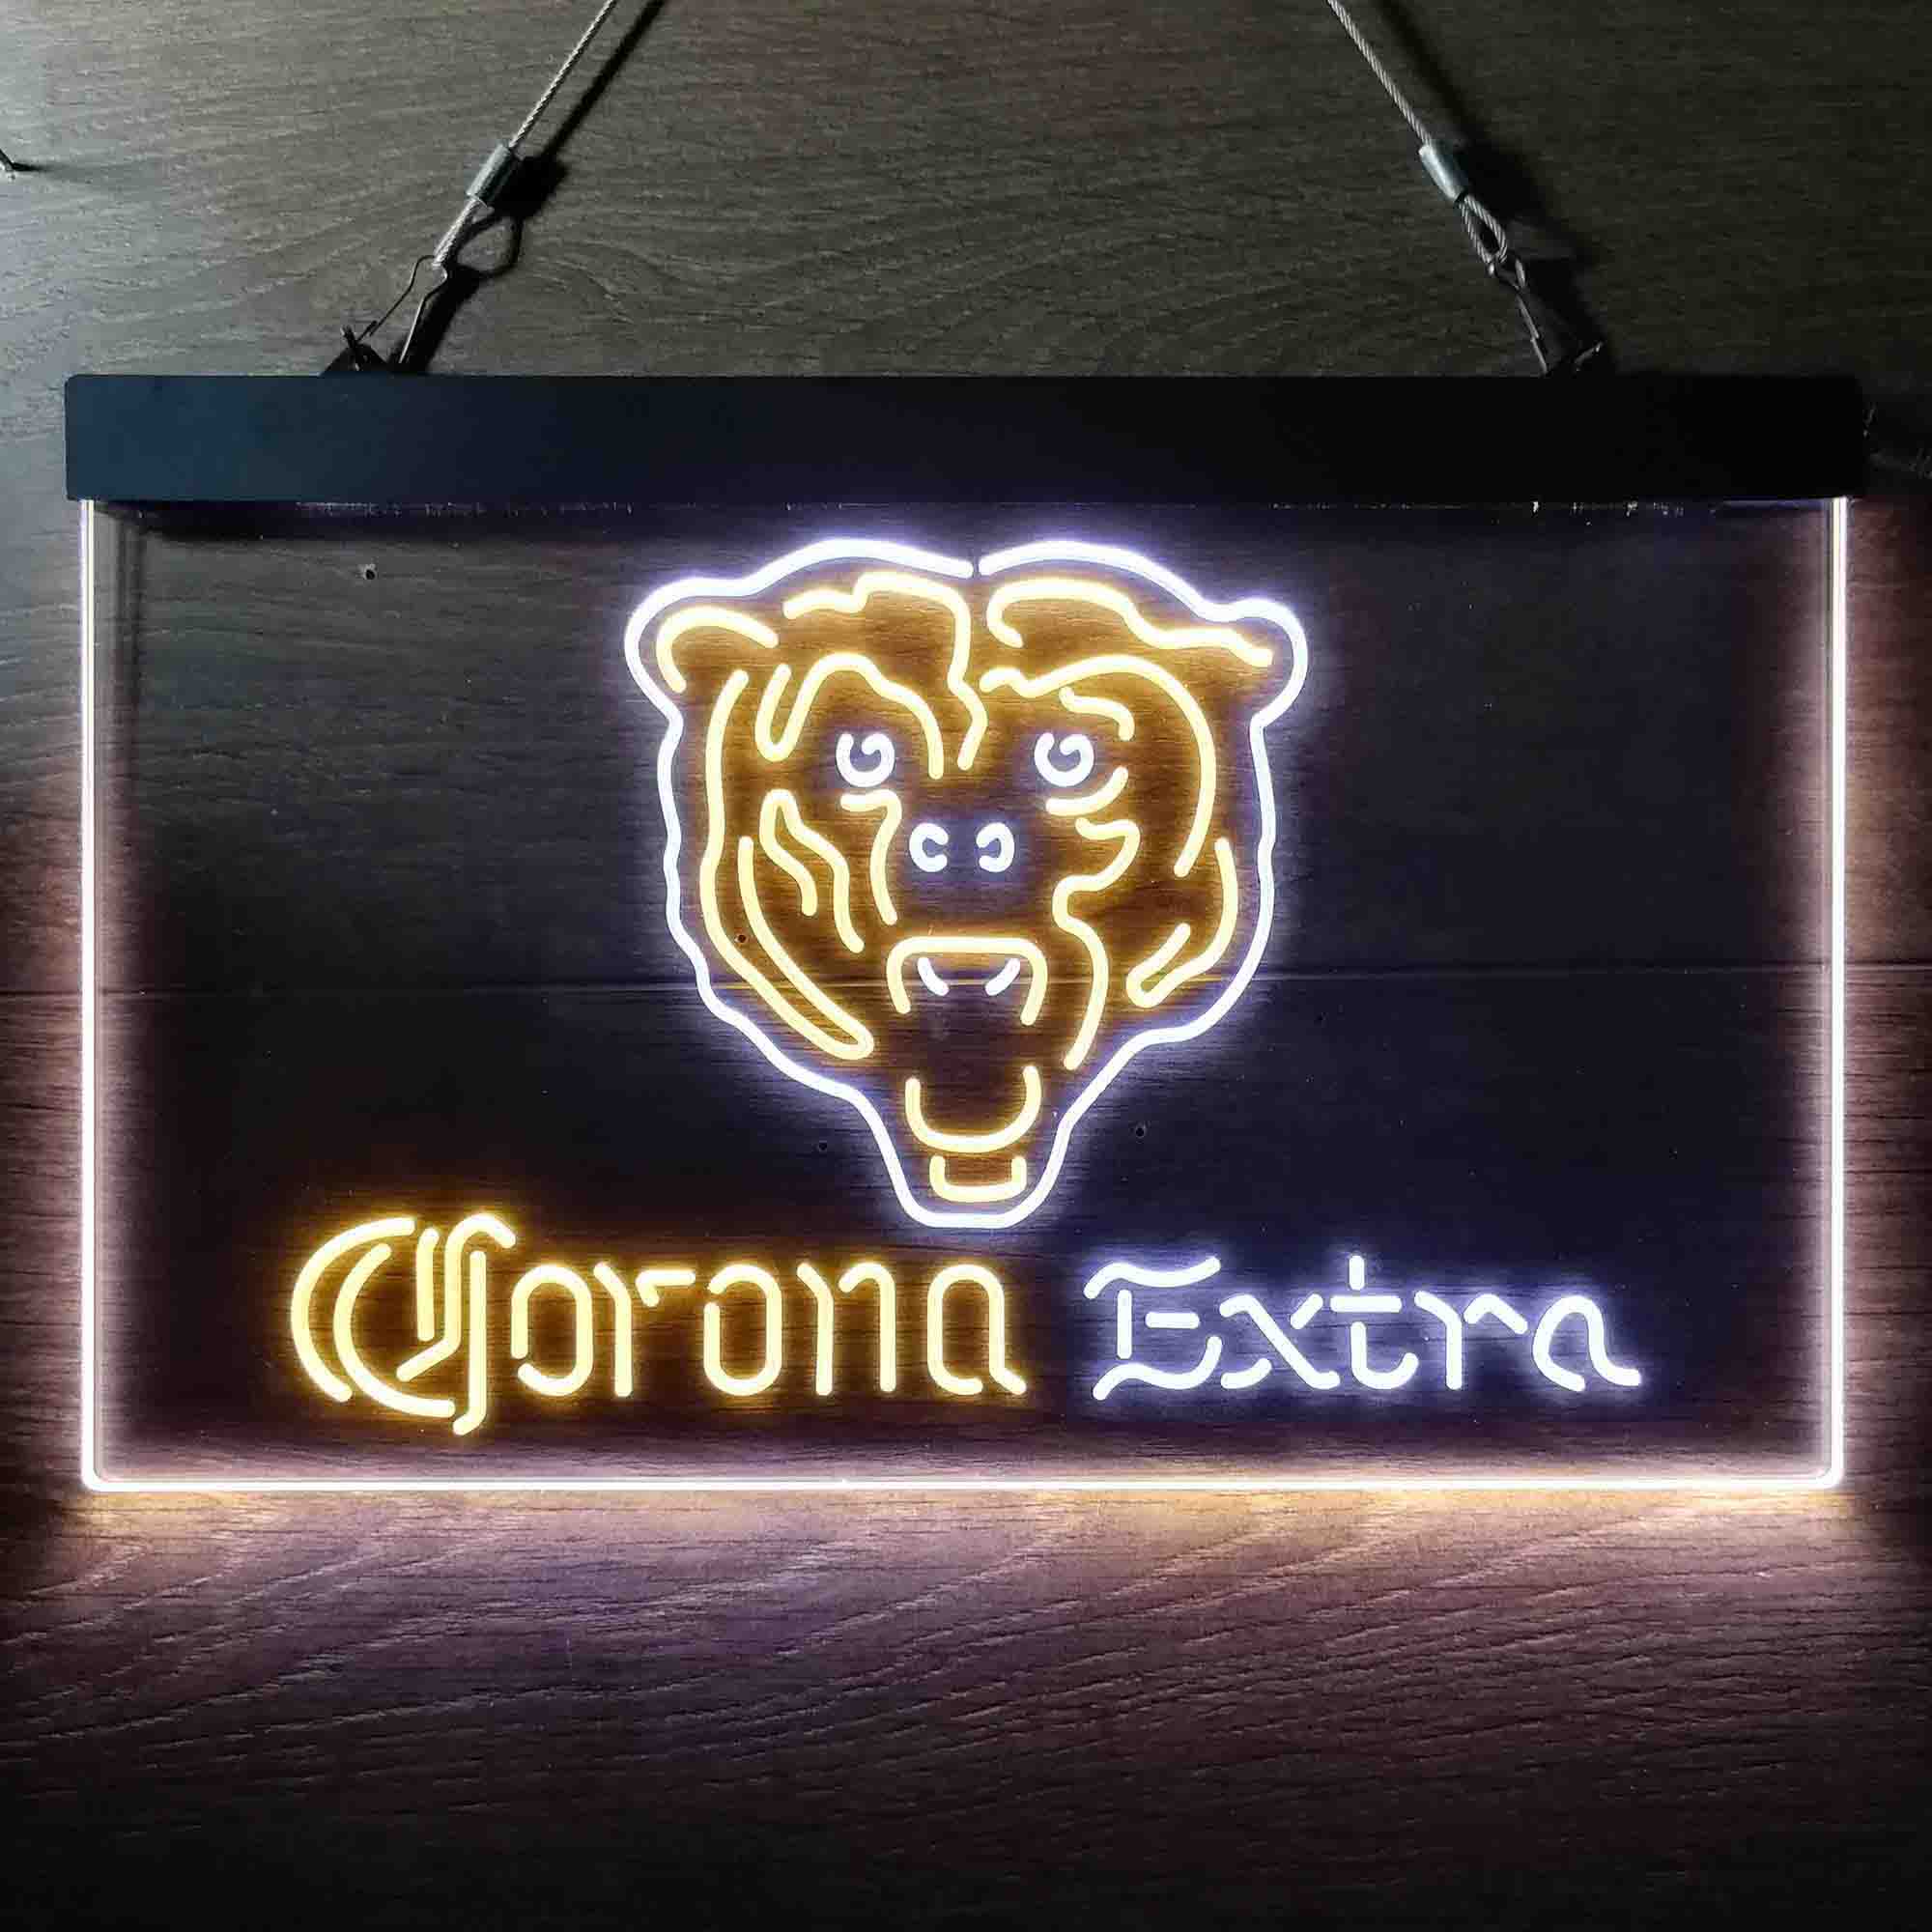 Corona Extra Bar Chicago Bears Est. 1920 Neon-Like LED Sign